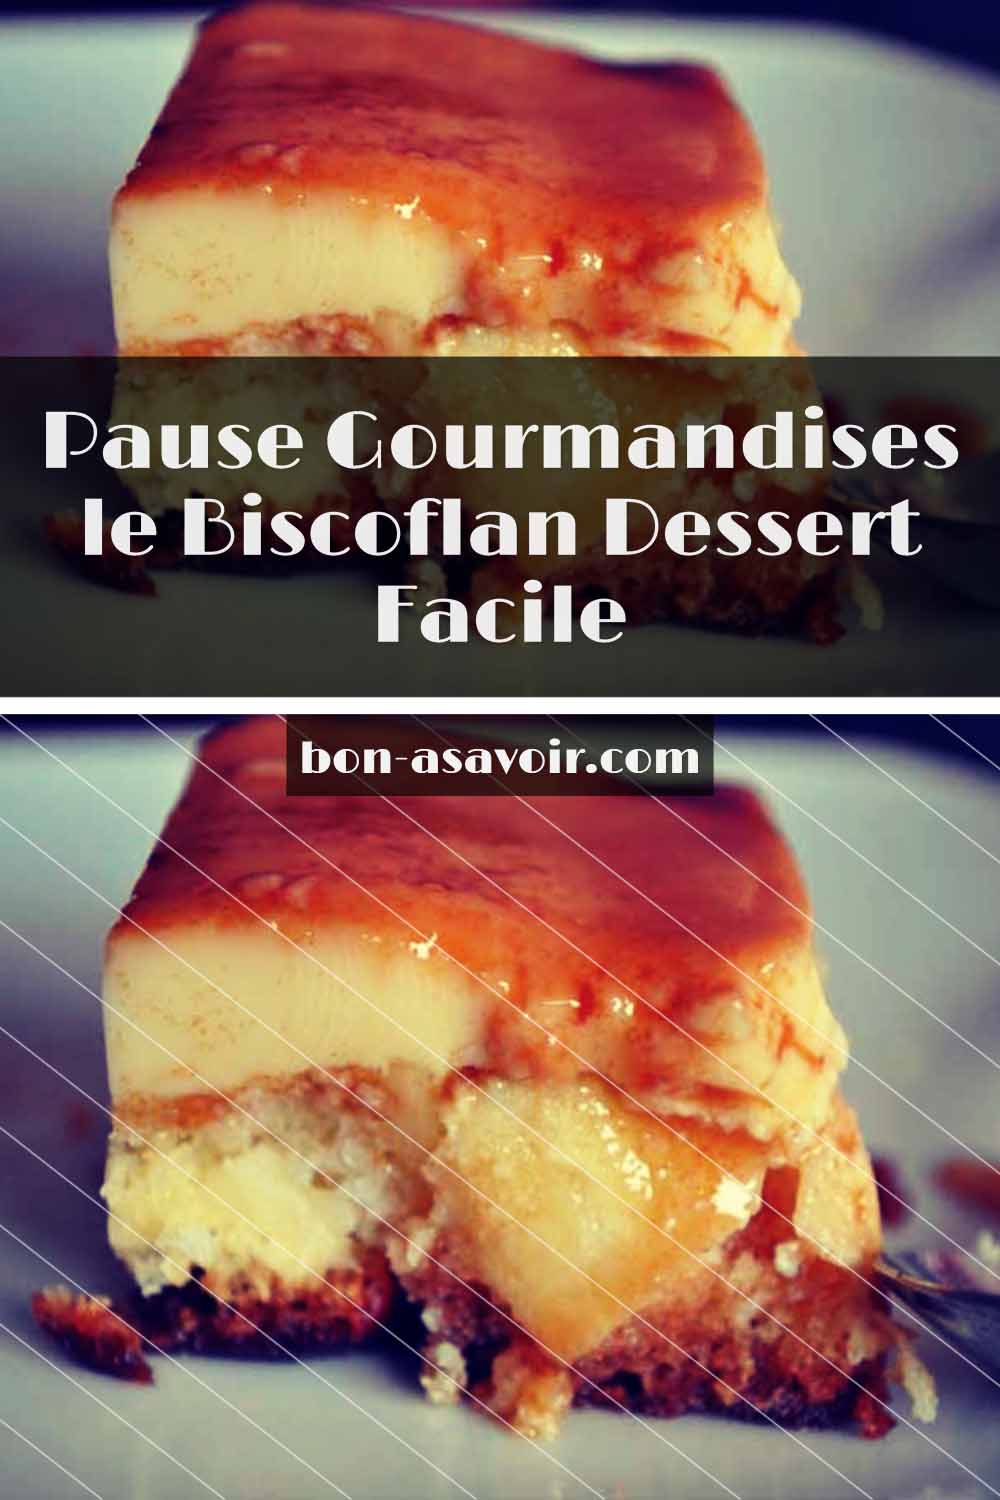 Pause Gourmandises: le Biscoflan Dessert Facile